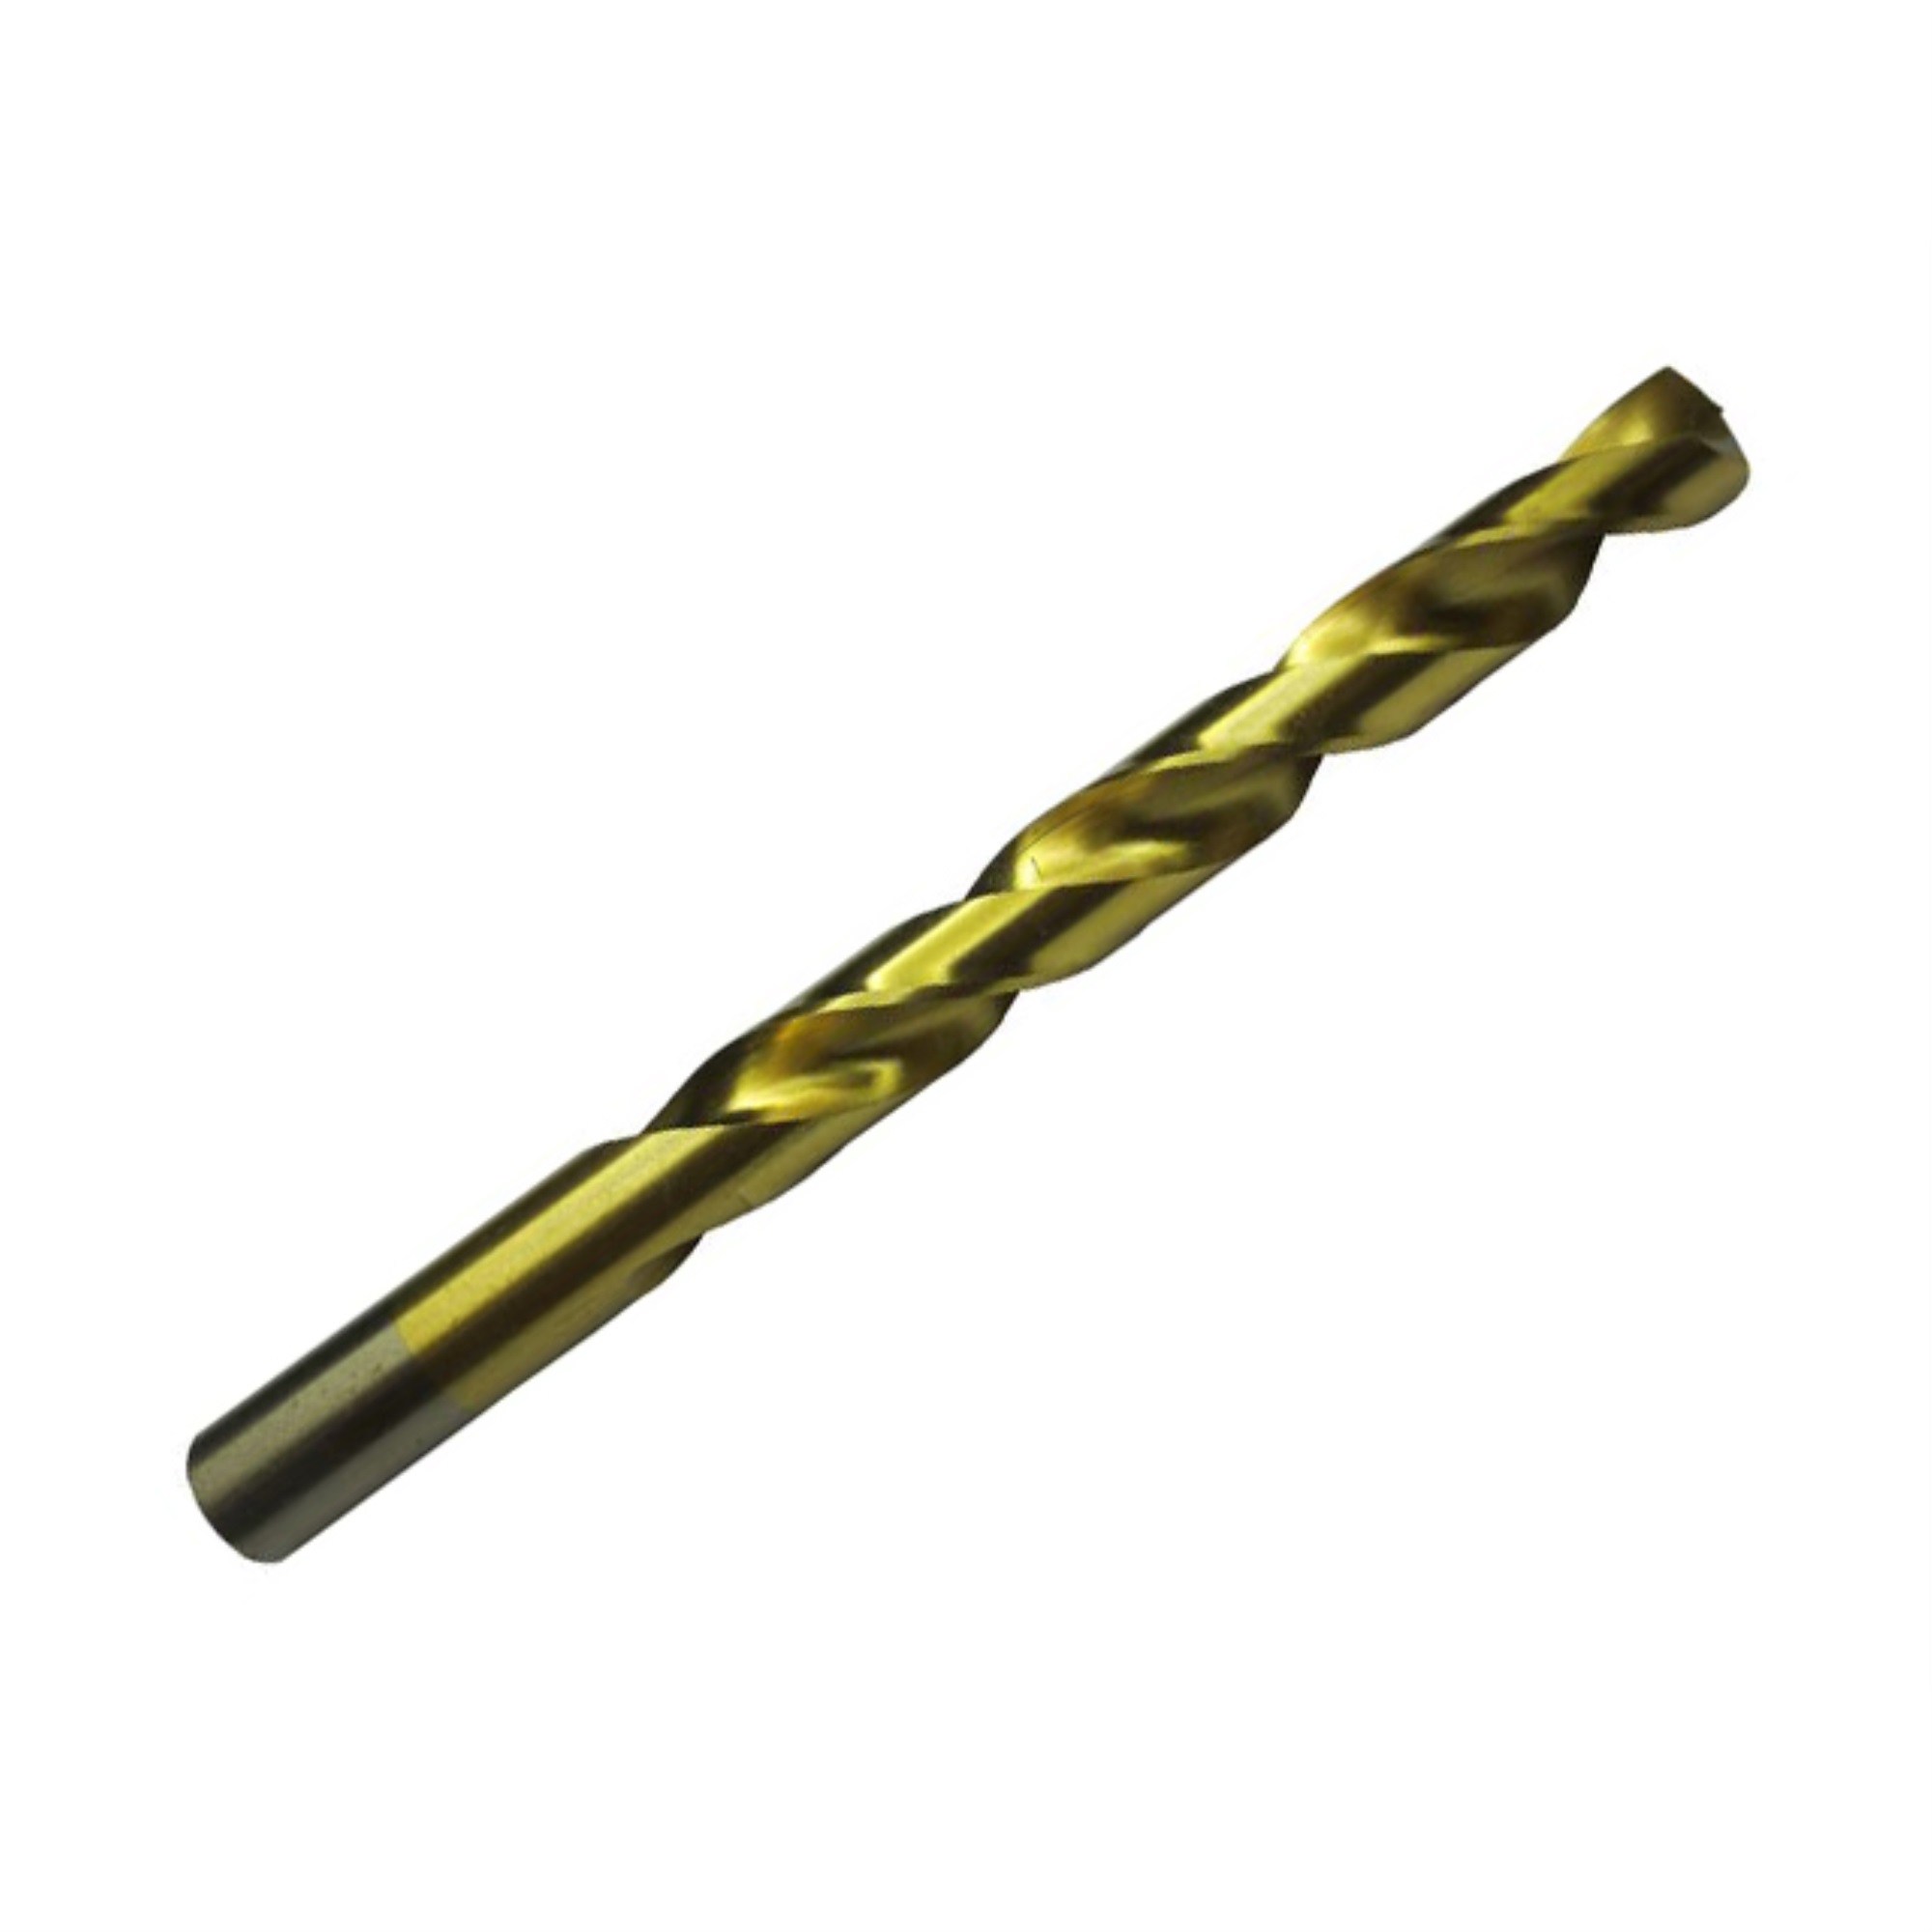 QUALTECH #34 Tin Coated Jobber Length Drill Bit, DWDTN34